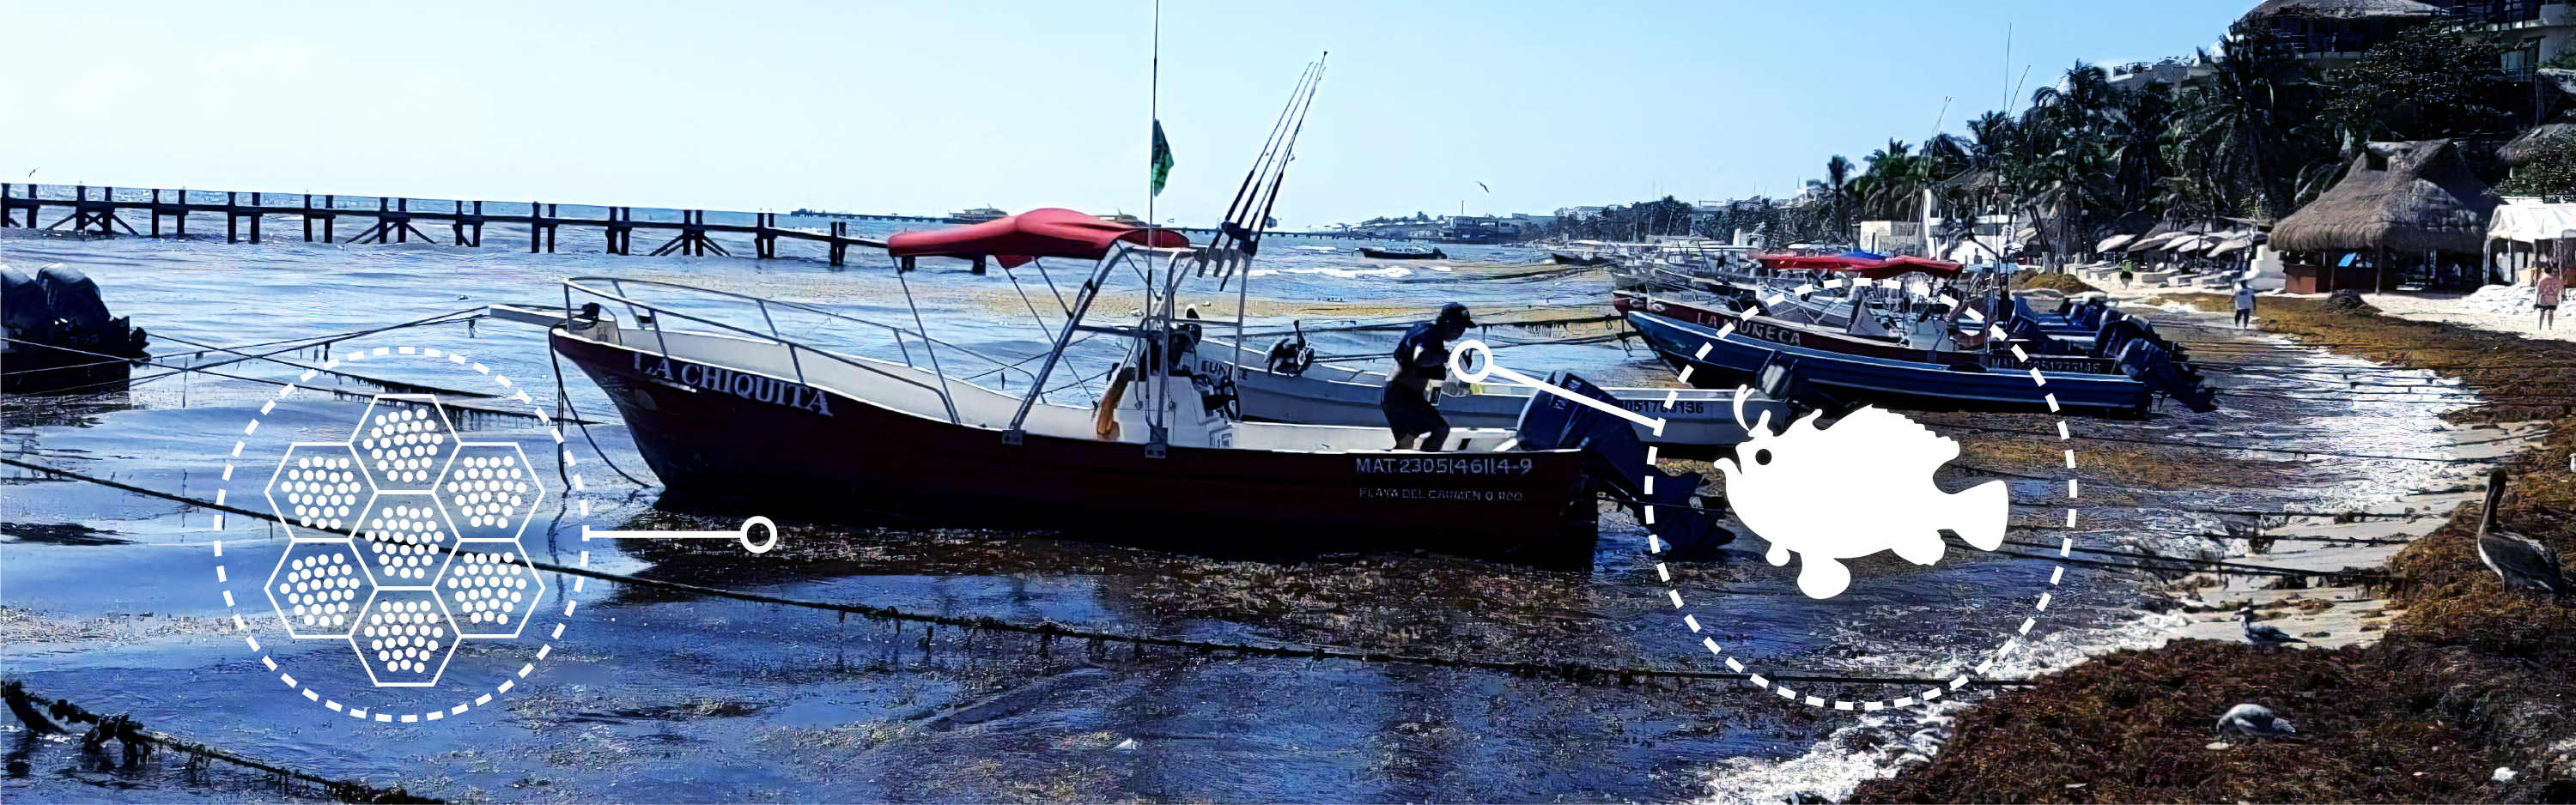 Seaweed boat